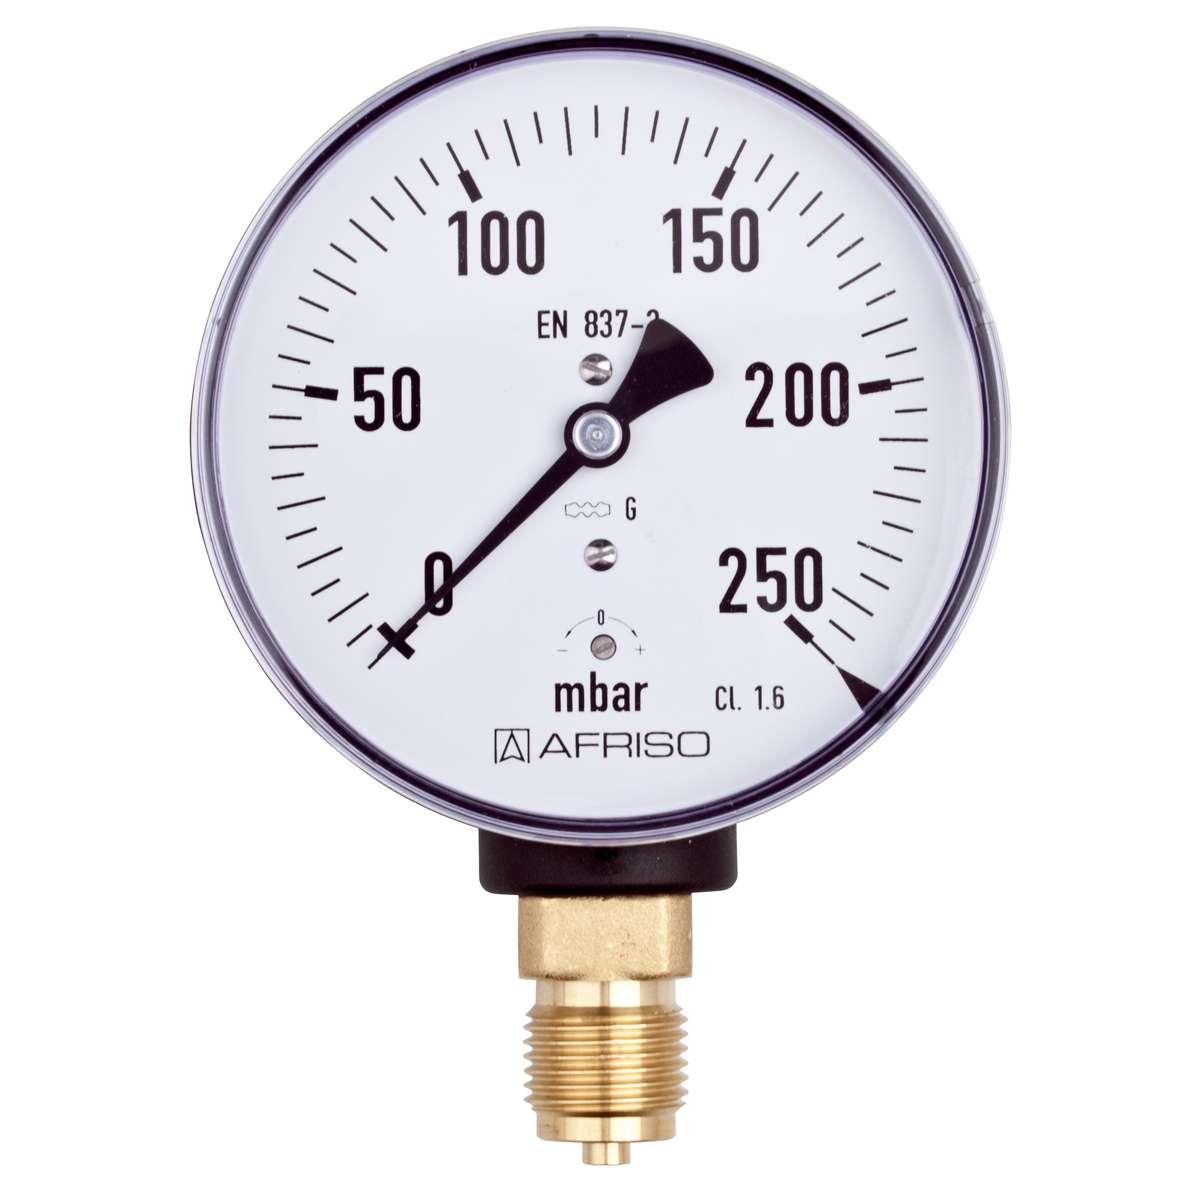 Manometr KP 100 pro plynná média, Ø 100 mm, 0 ÷ 25 mbar, G½", radiální, typ D2 - AFRISO.CZ